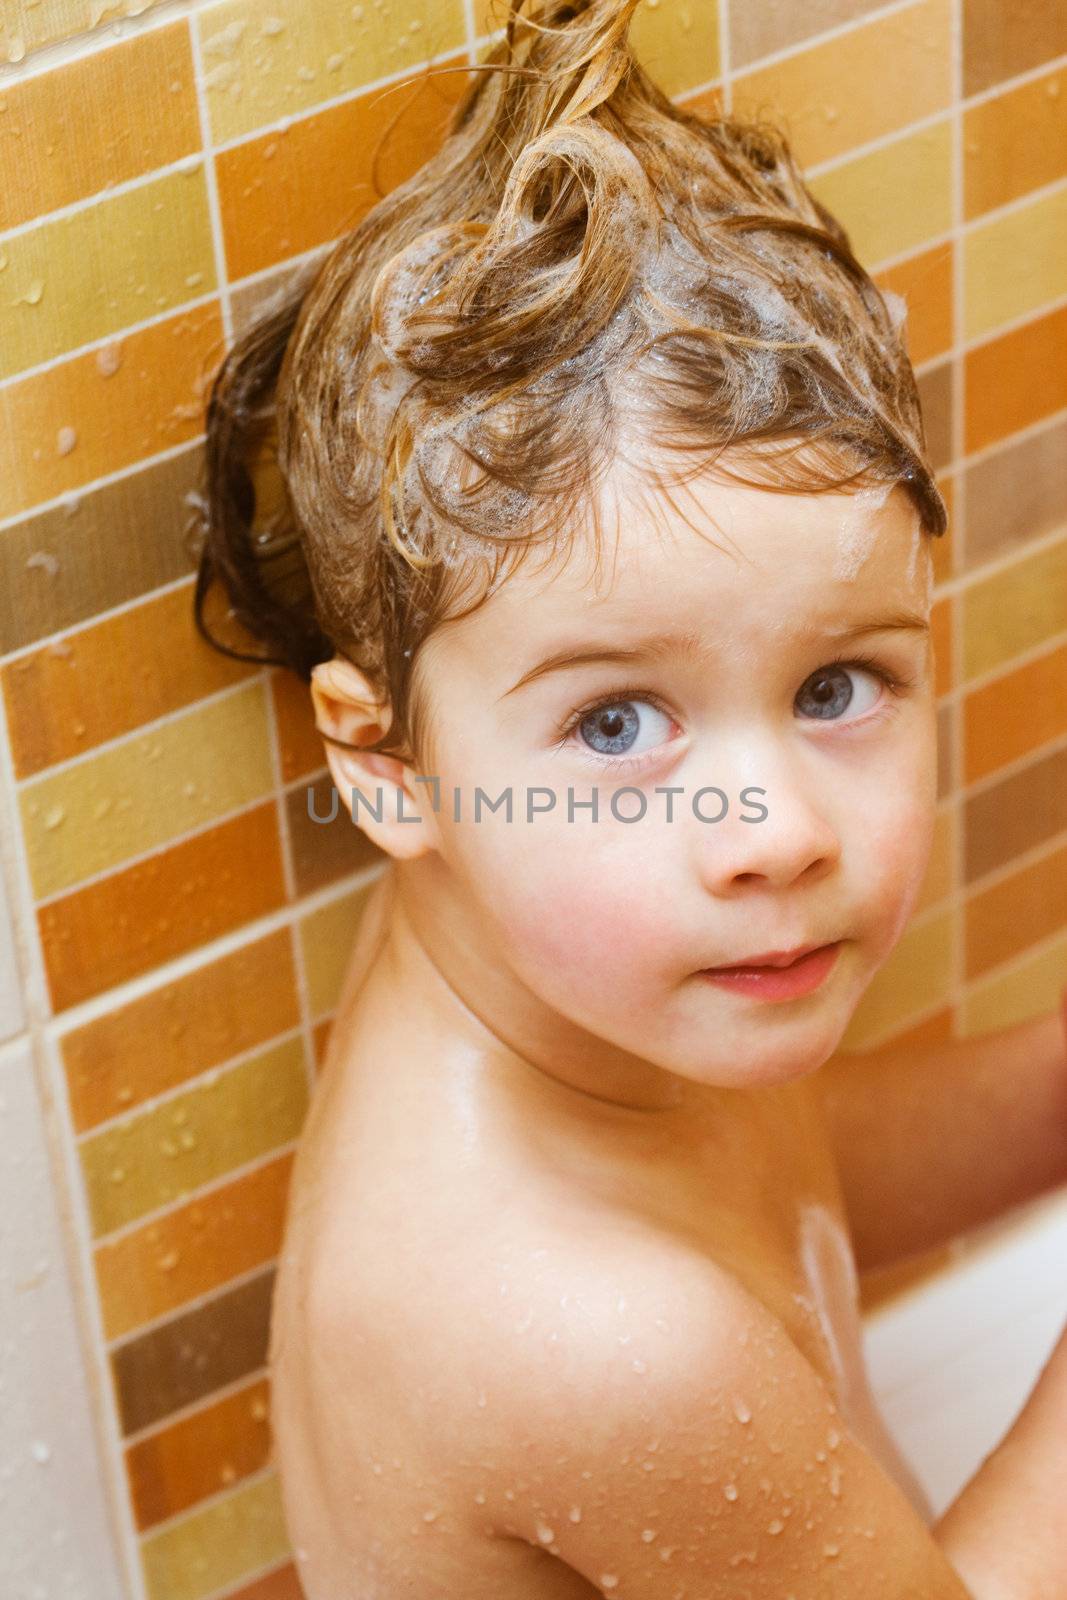 people series: little girl take a bath